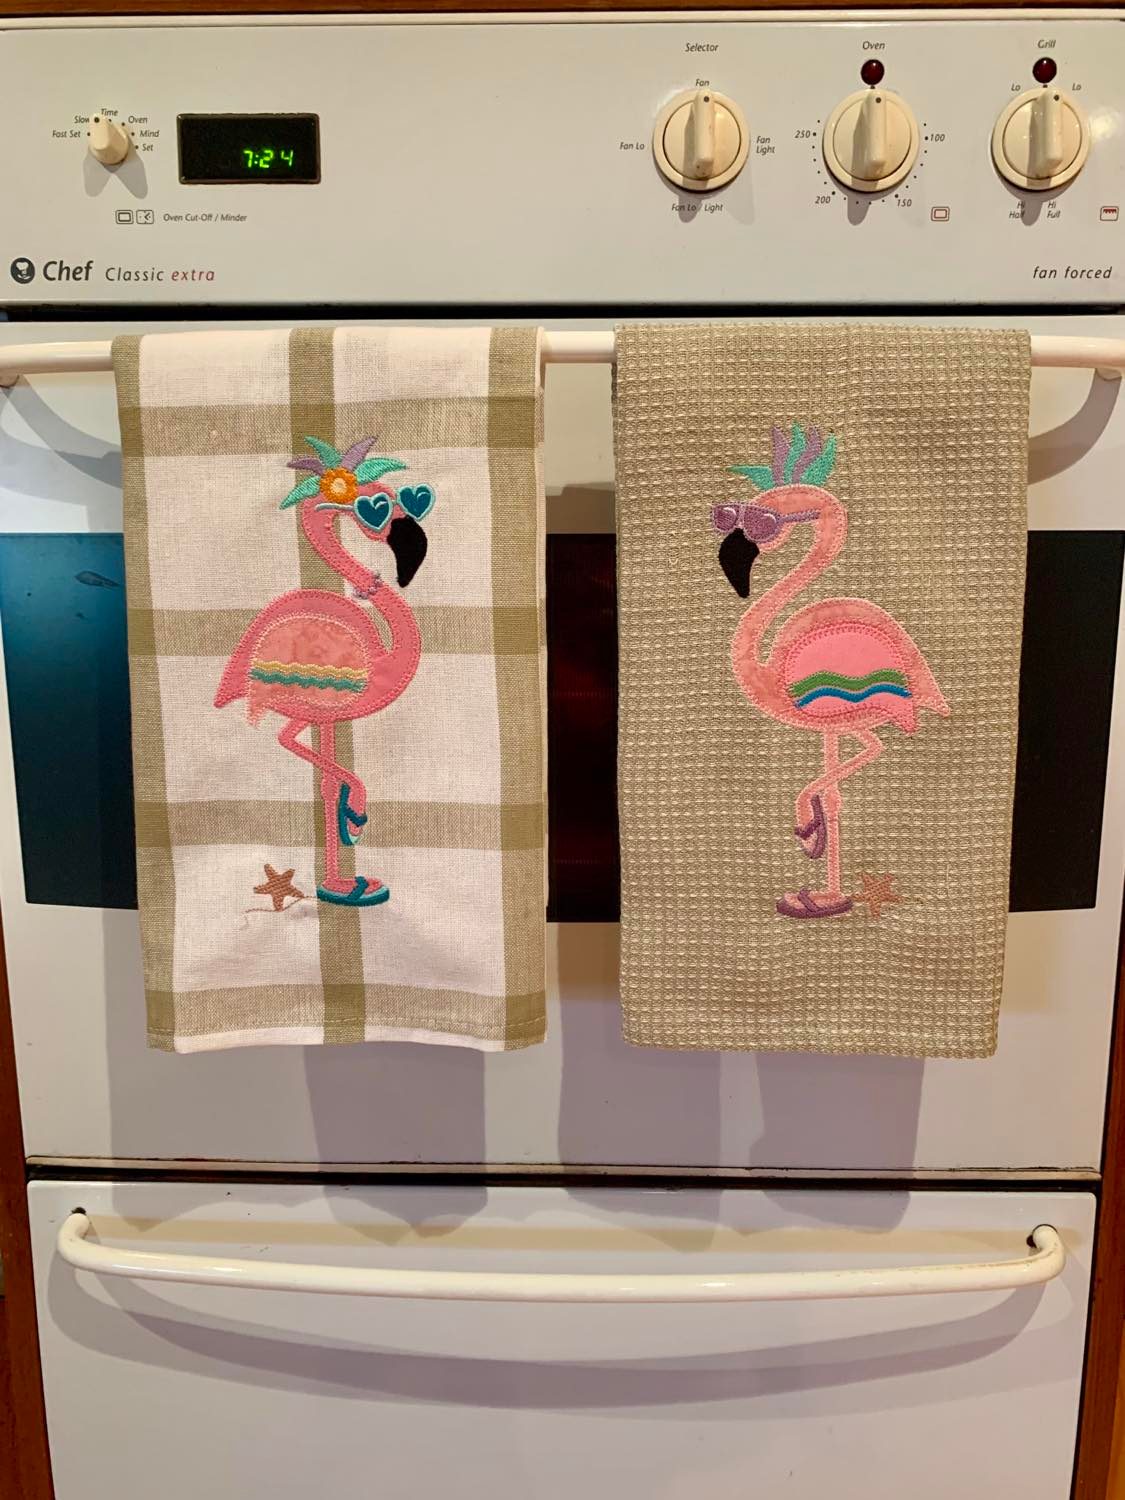 Flamingo towels on oven